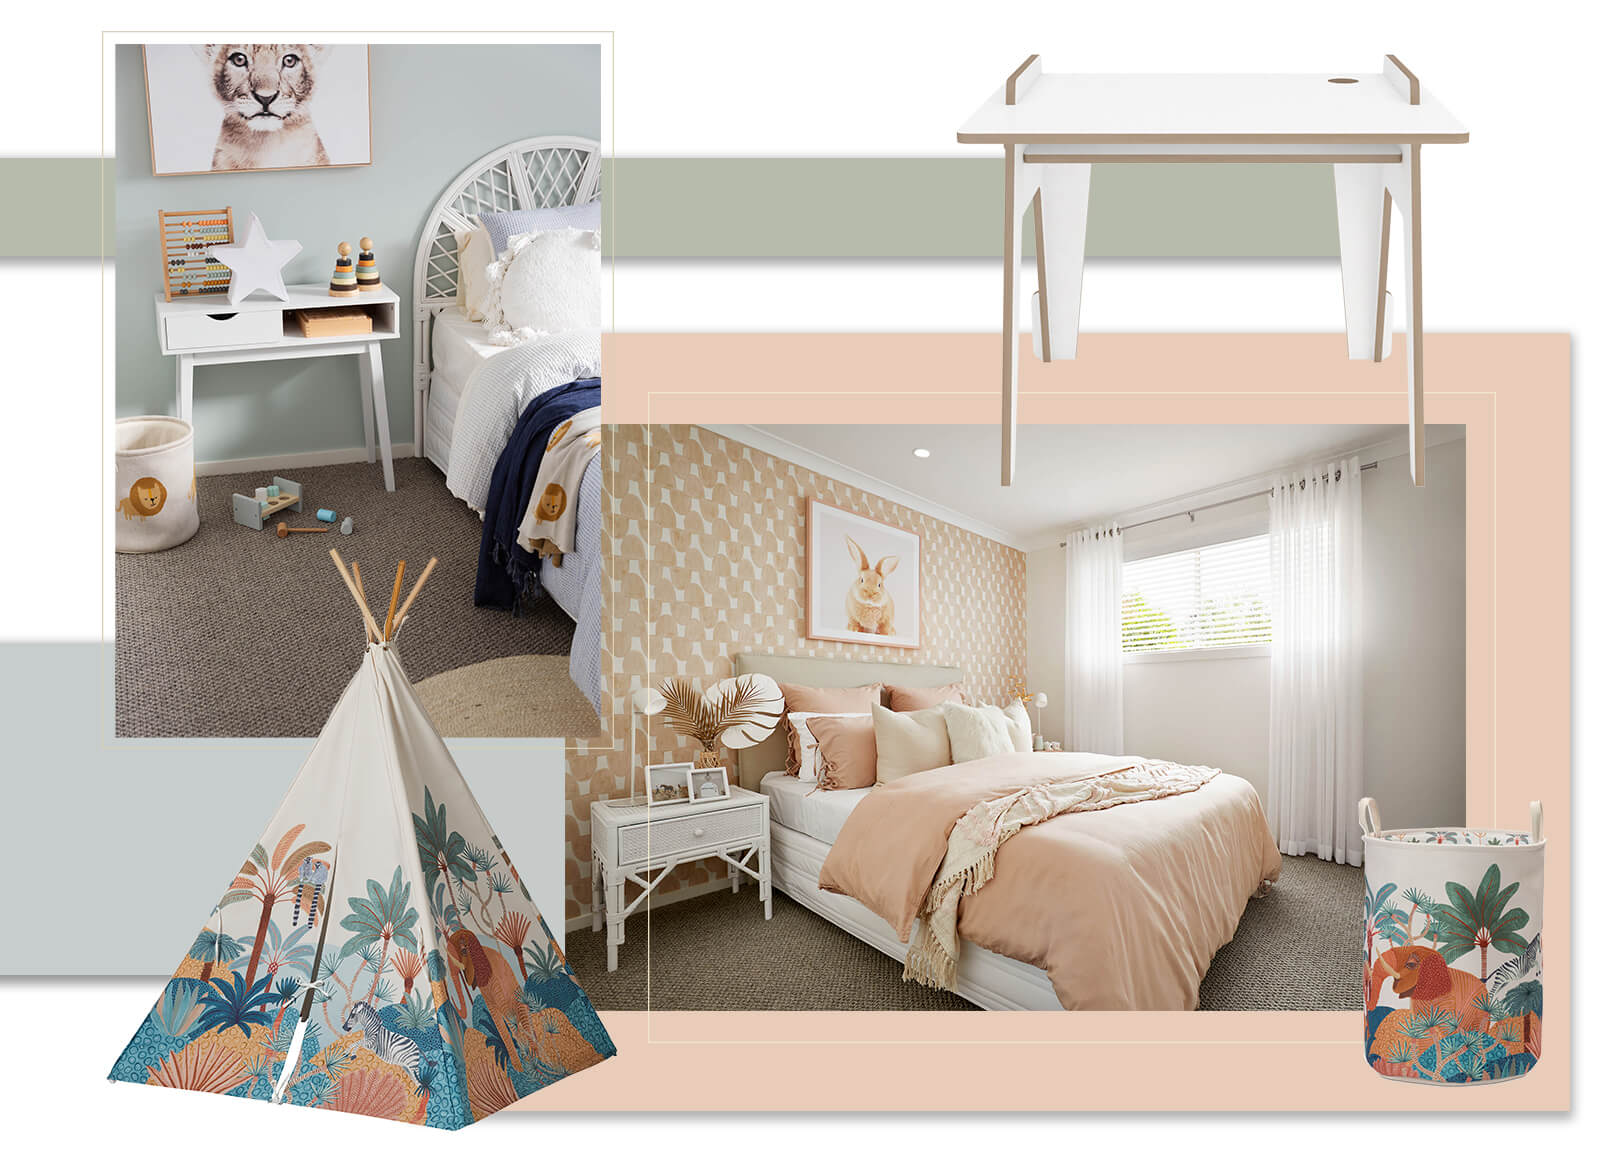 3. 8-tips-for-designing-the-ultimate-kids-bedroom-Carlisle-homes-body1.jpg